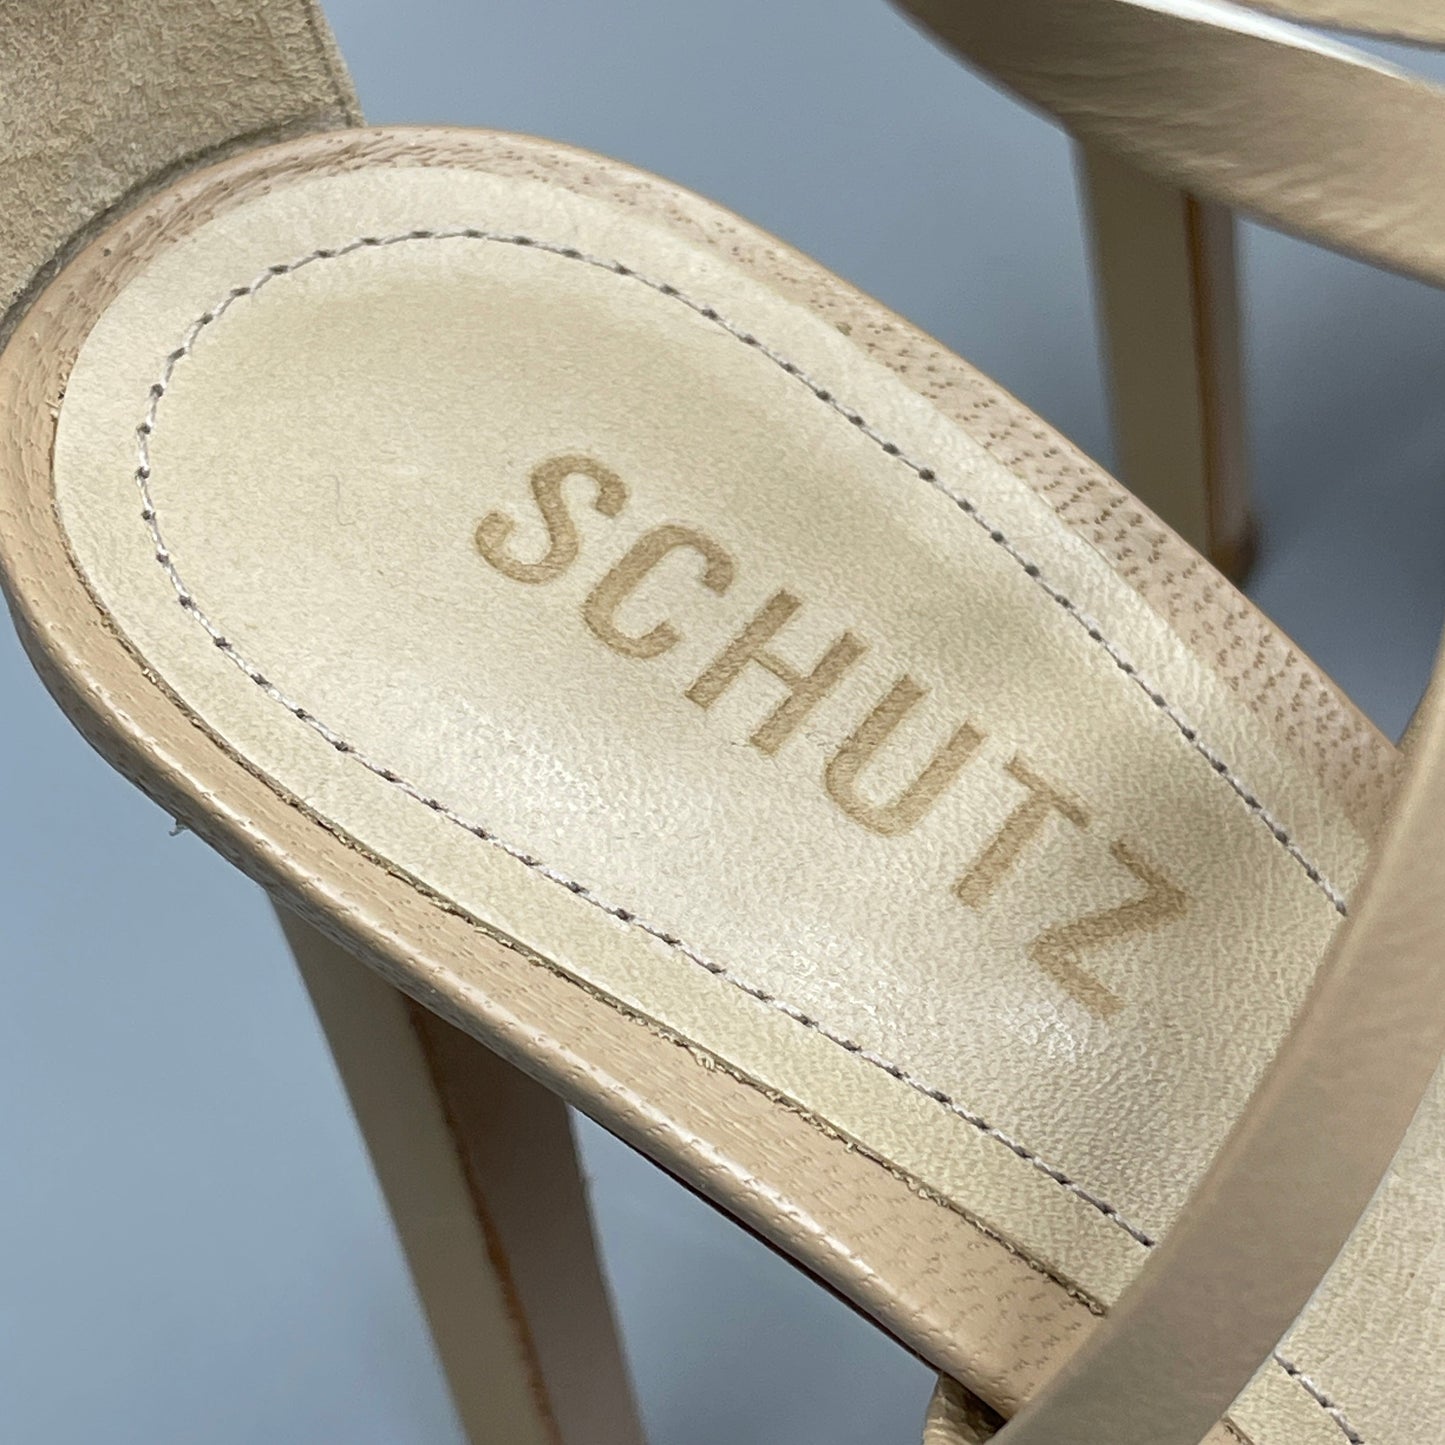 SCHUTZ Bryce Ankle Tie Women's Leather High Heel Sandal Light Nude Sz 9.5B (New)